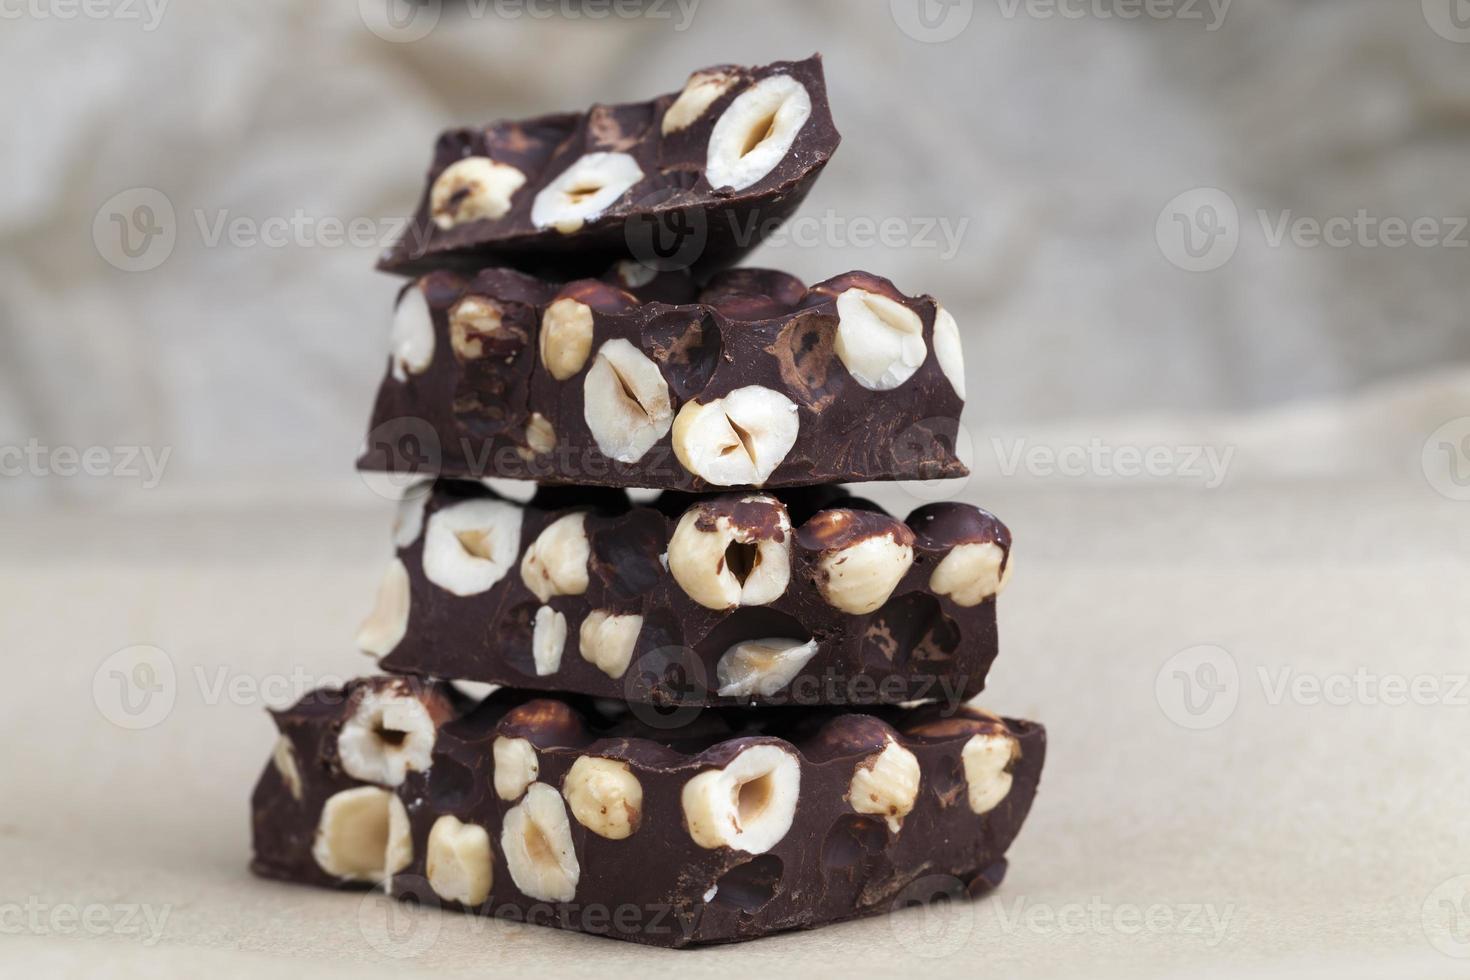 milk chocolate with whole and chunks of hazelnuts photo